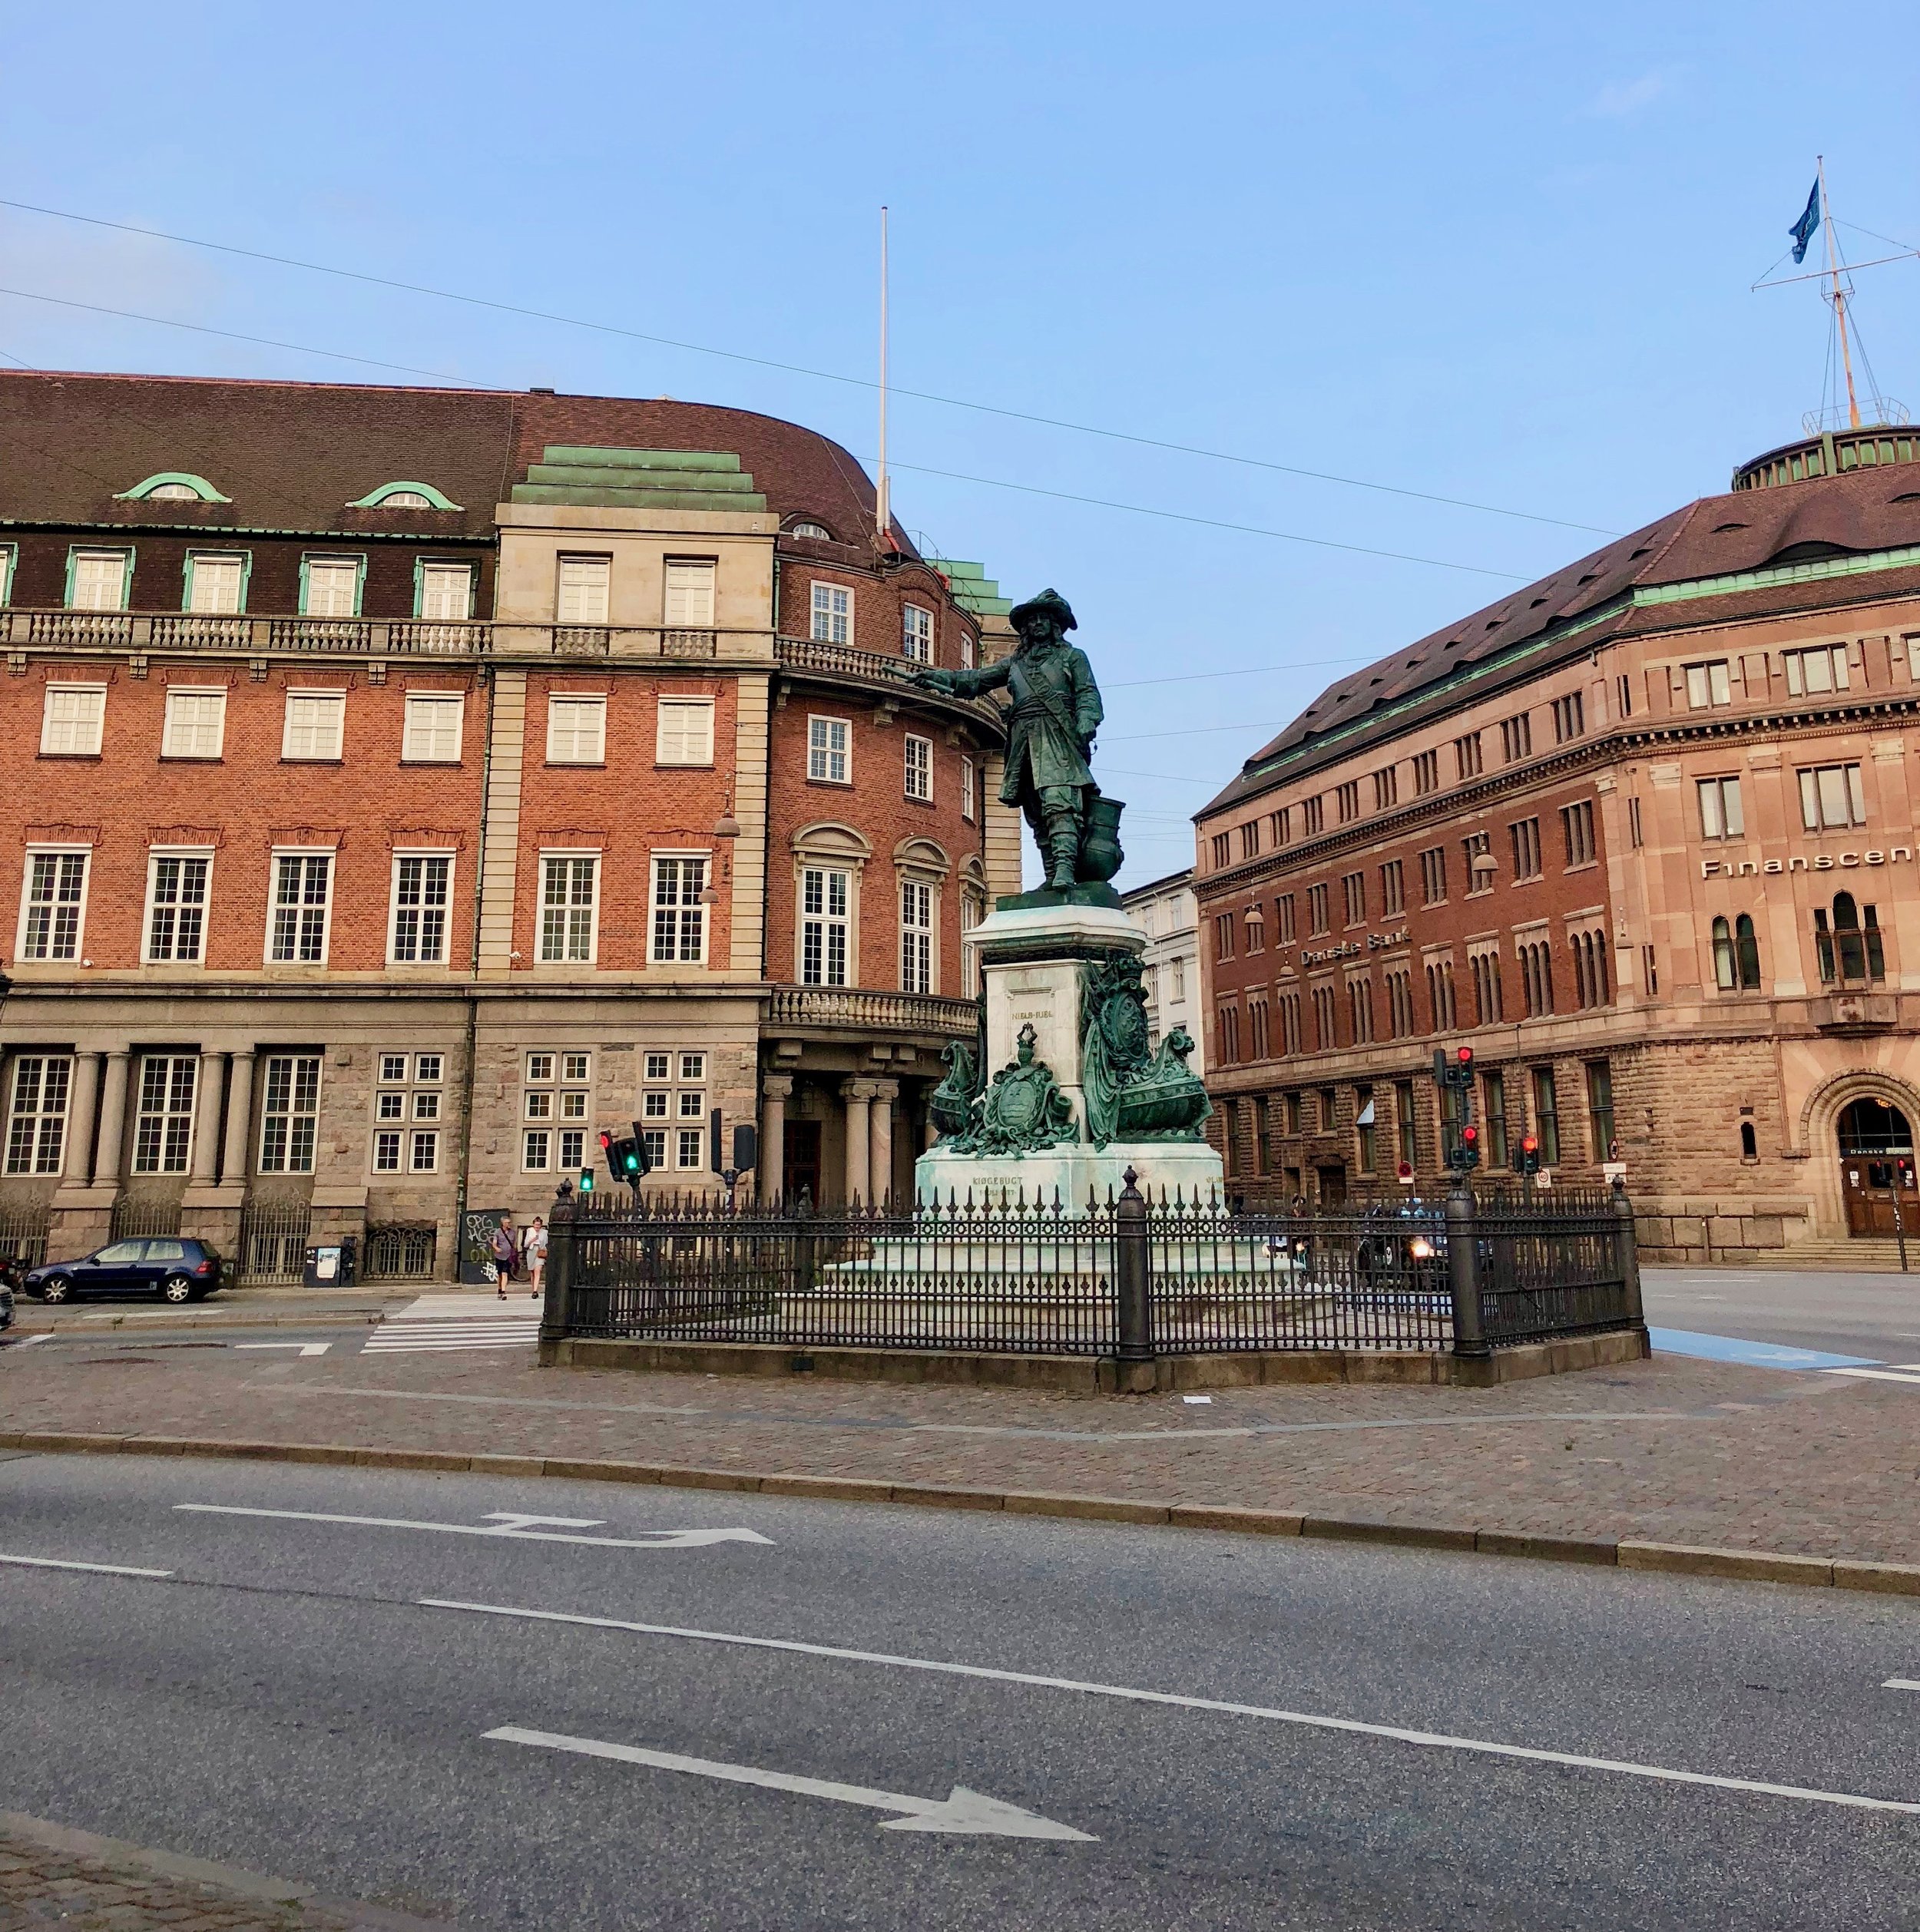 Statue of Niels Juel